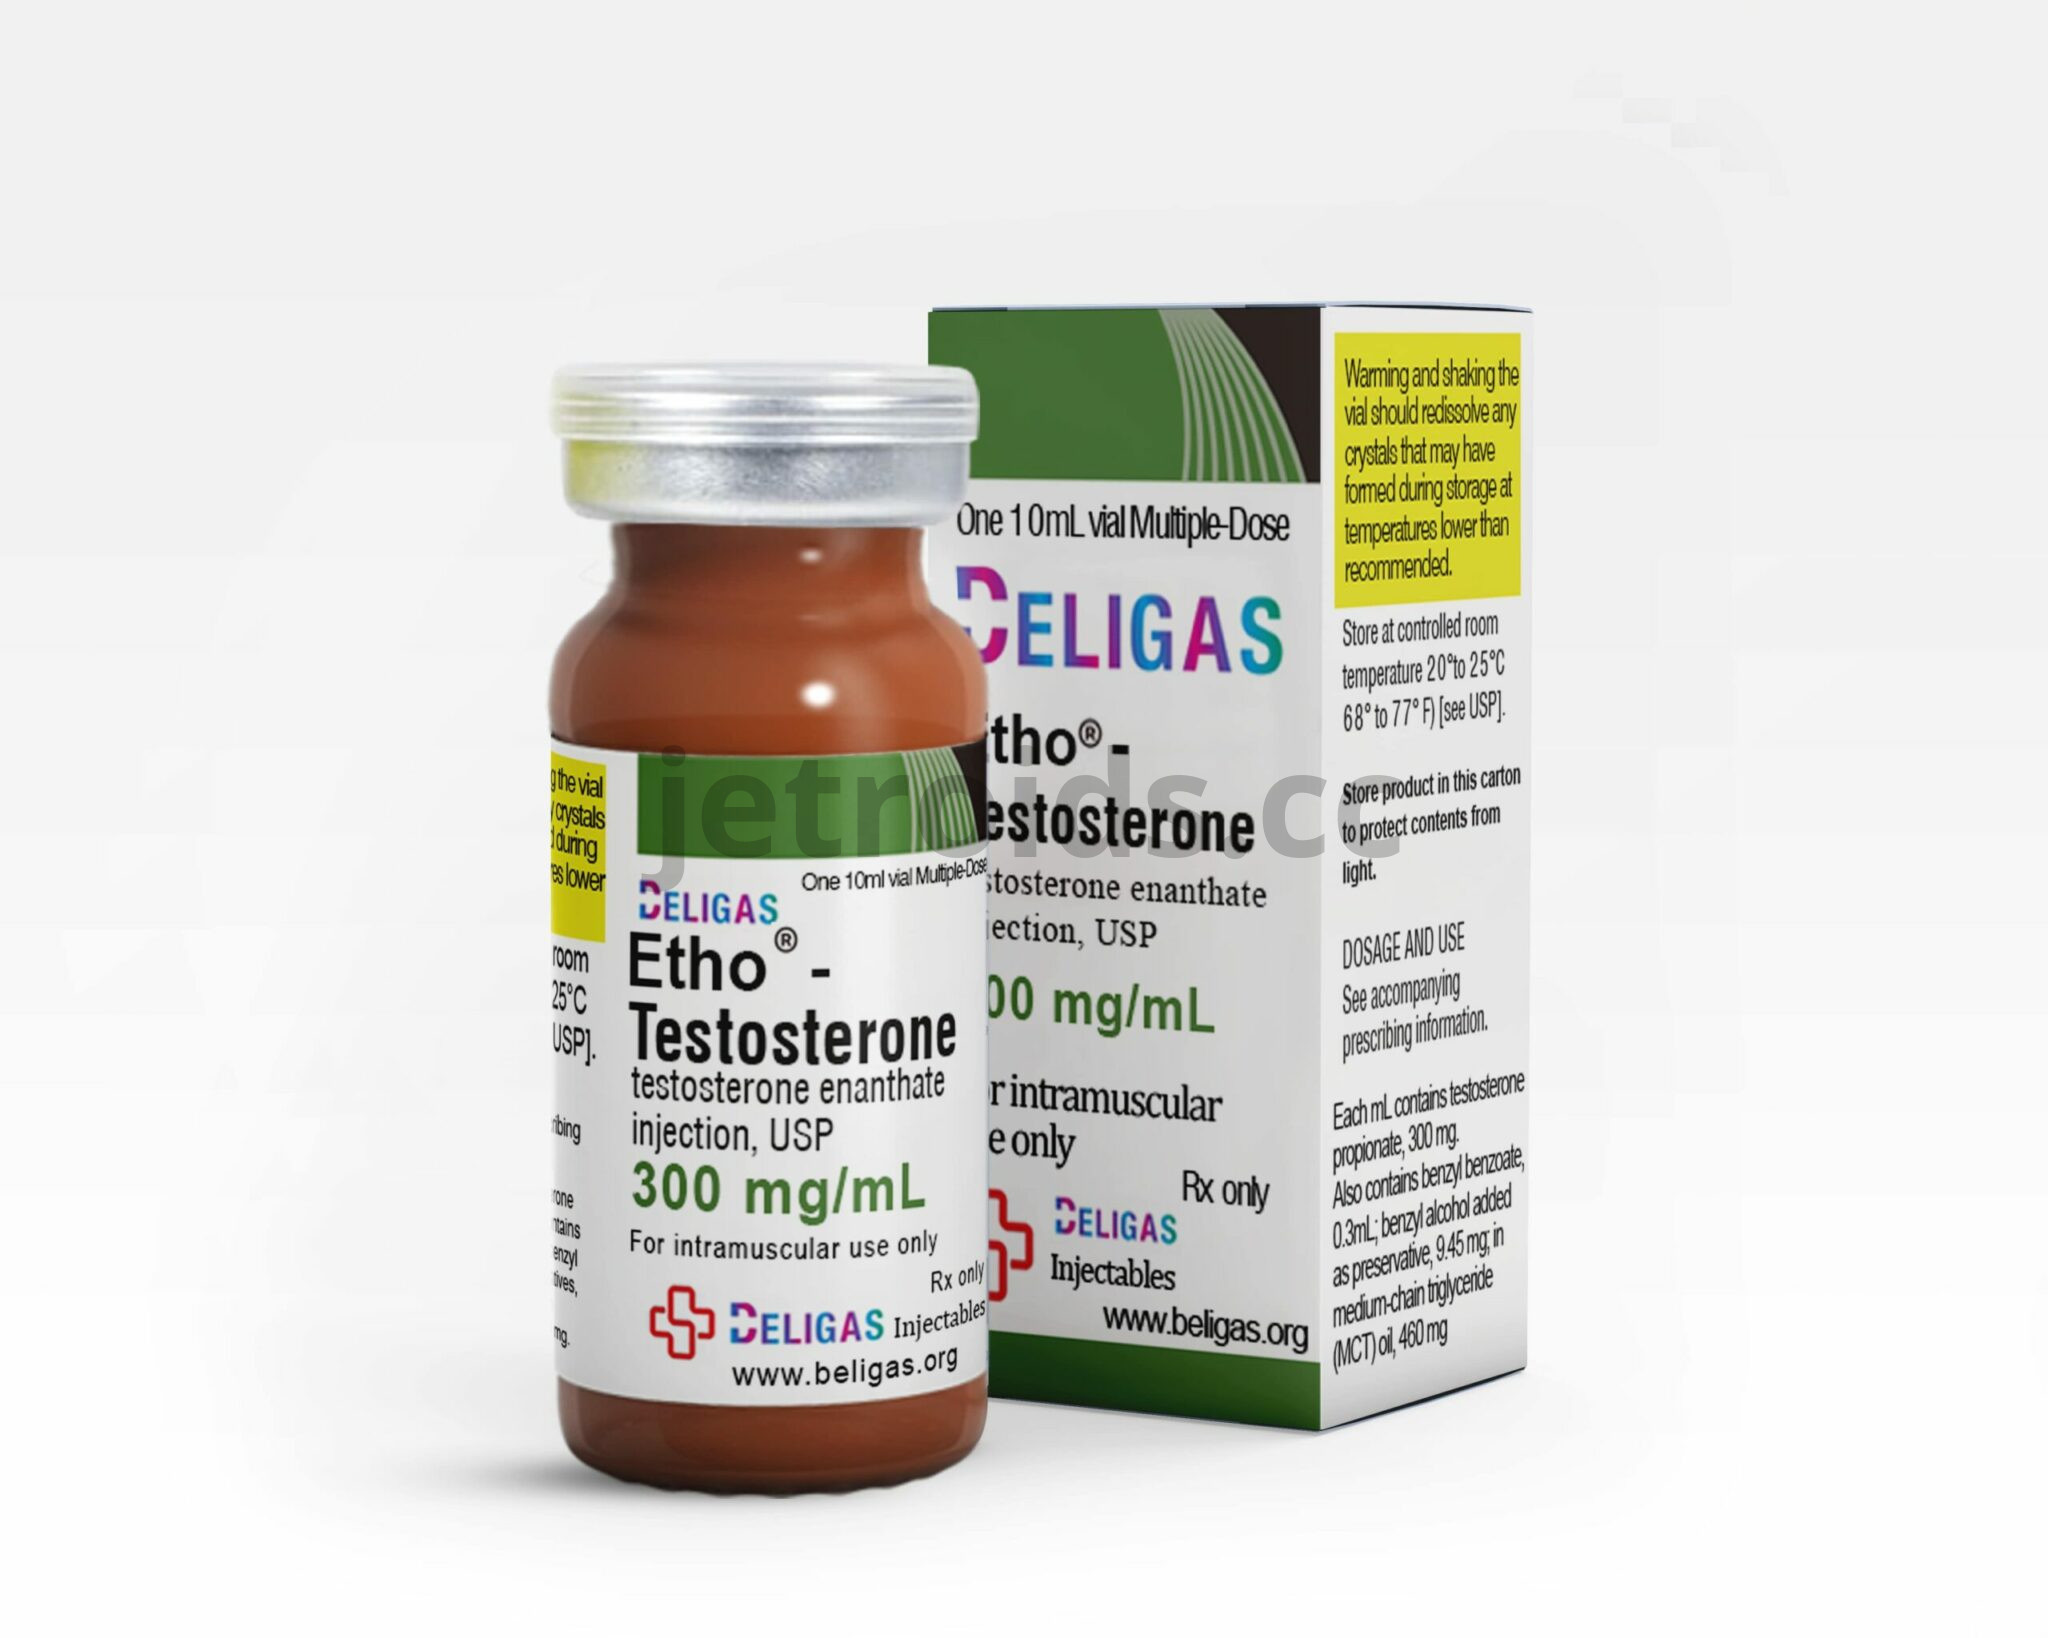 Beligas Pharma Etho - Testosterone 300mg/ml Product Info